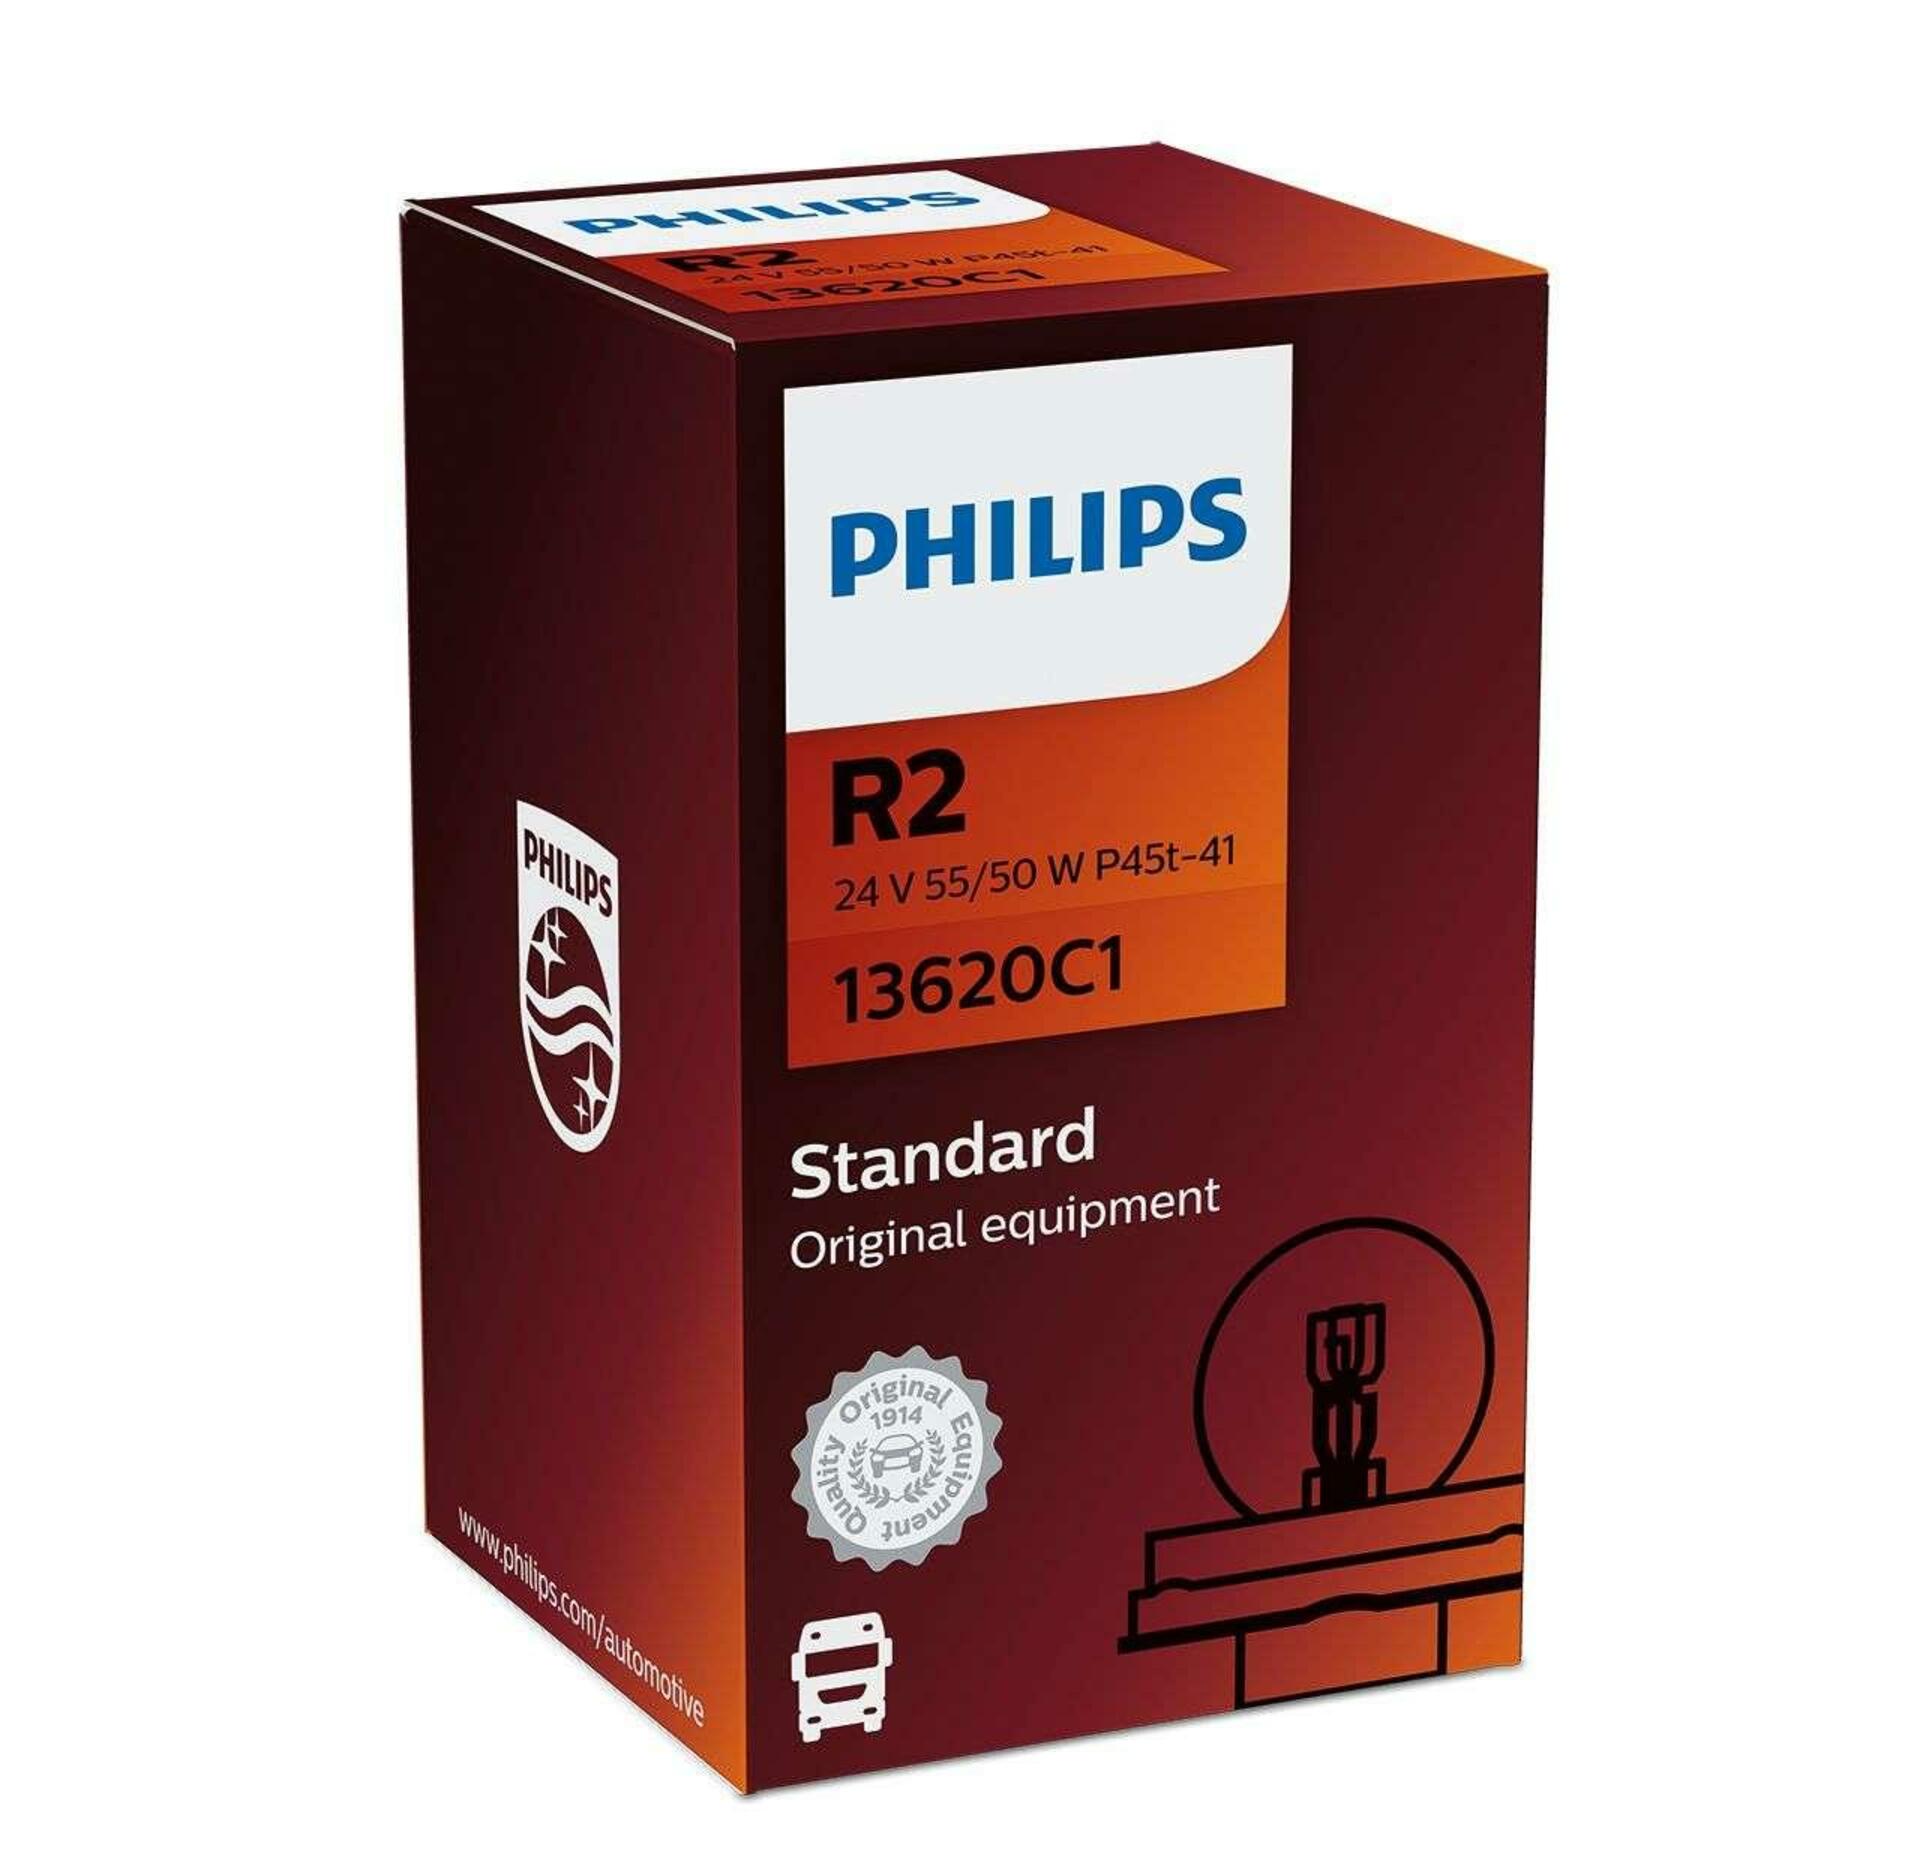 Philips R2 24V 55/50W P45t-41 24V Halogen 1ks 13620C1